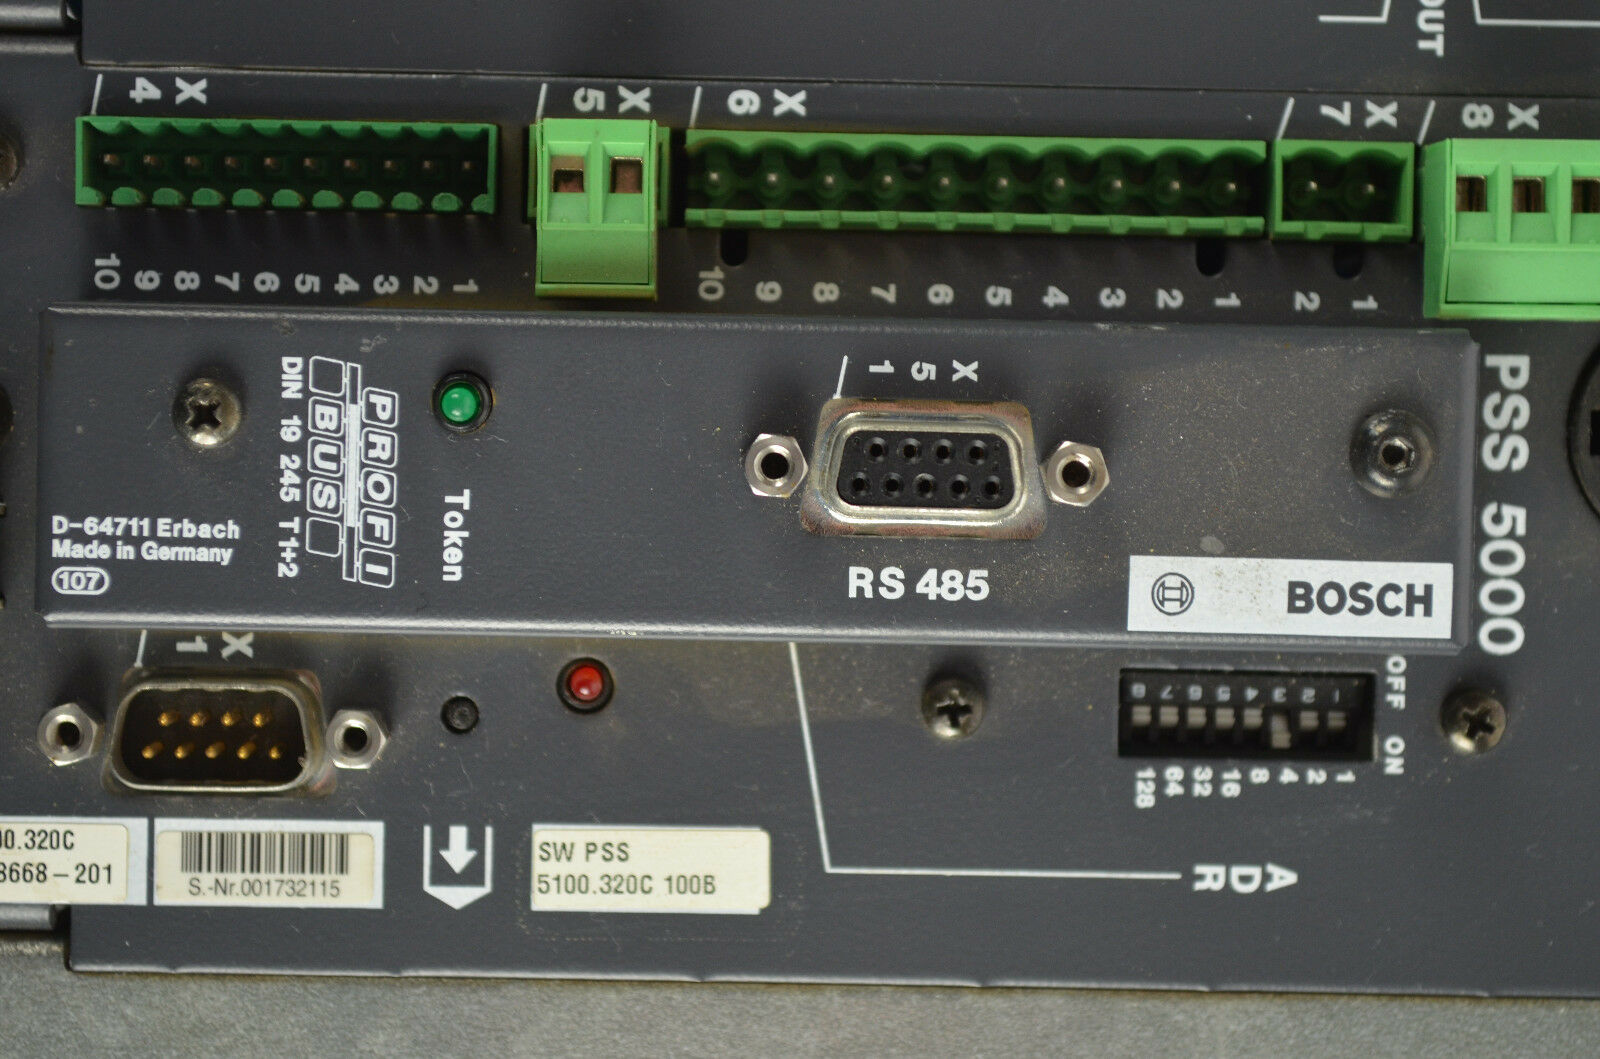 Bosch PSS 5000 RS485